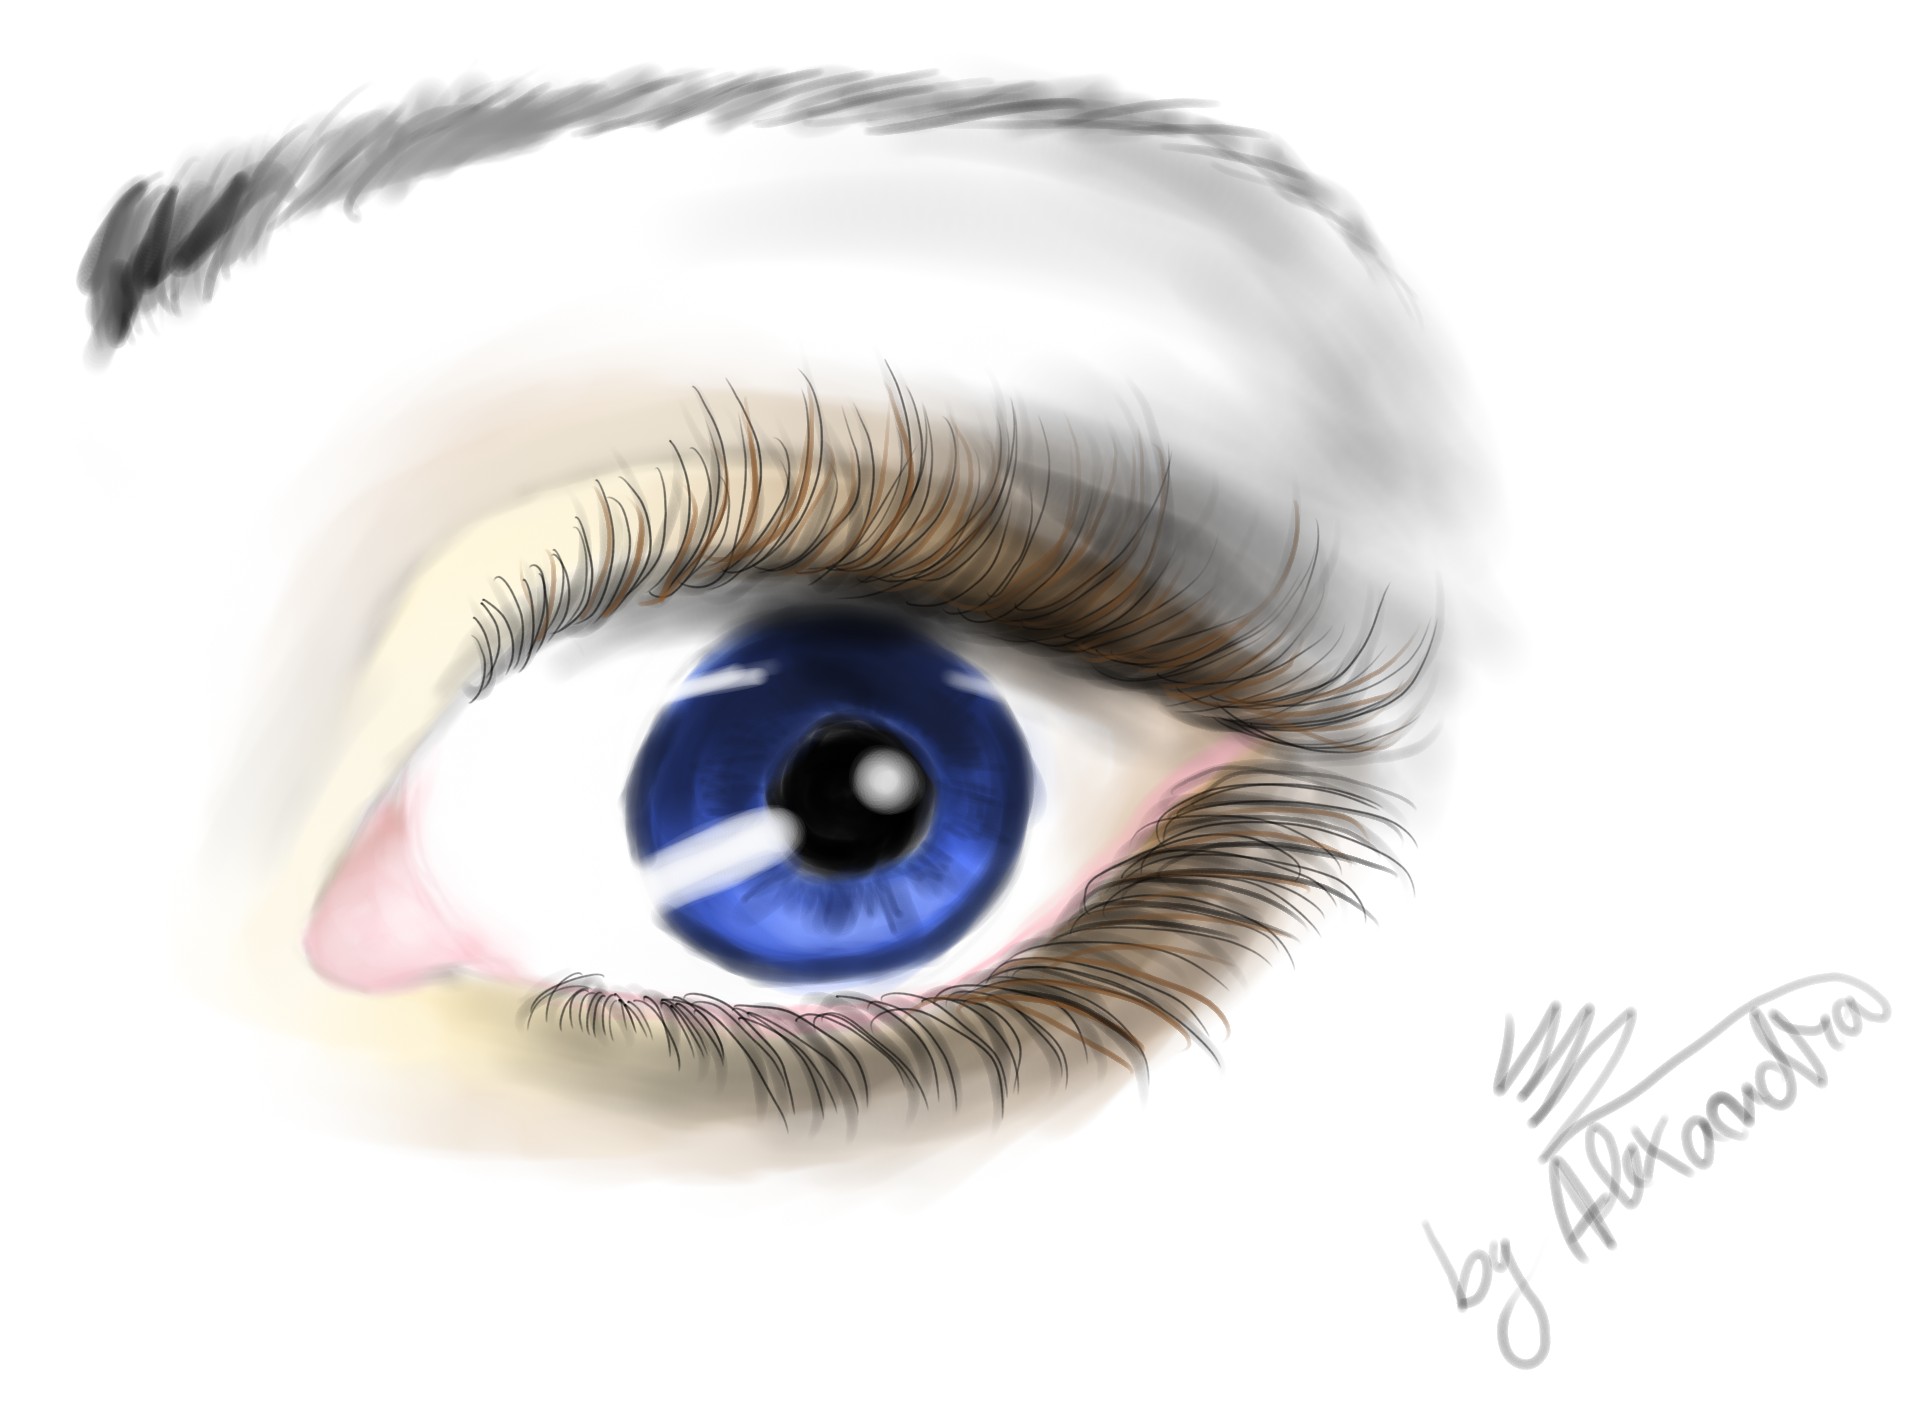 Semi Realistic Eye by ScarletAlpha on DeviantArt